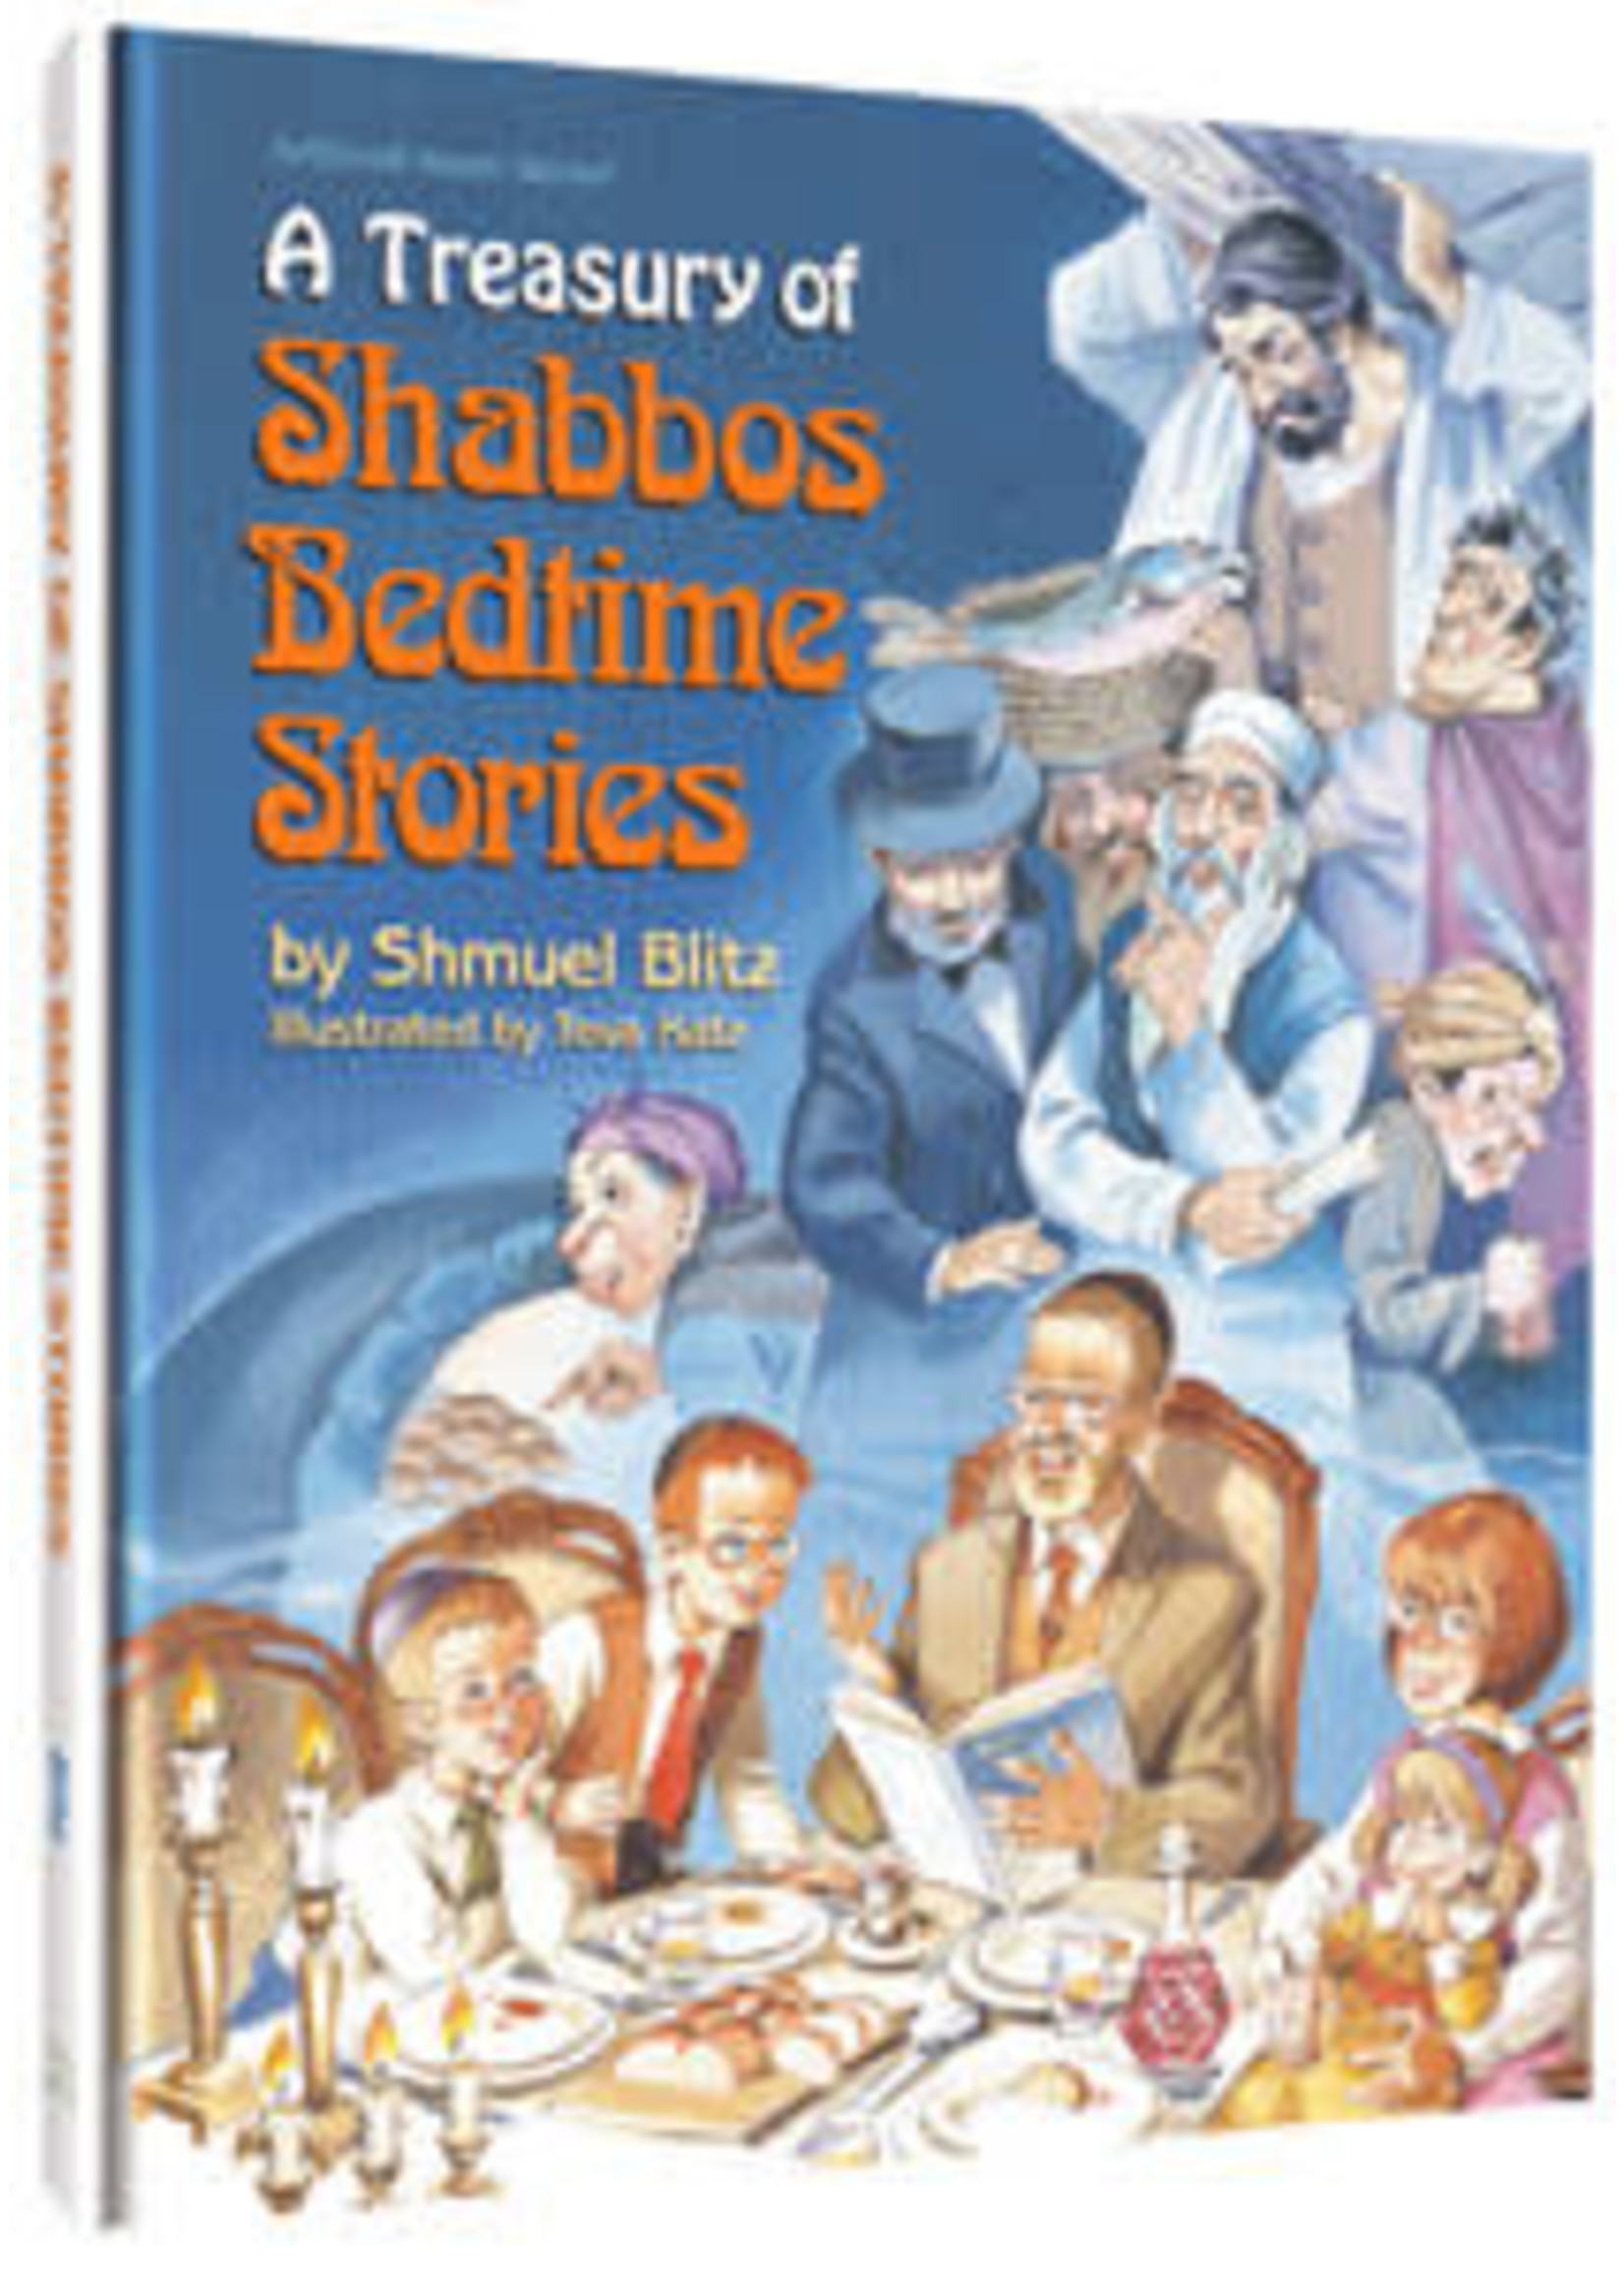 A TREASURY OF SHABBOS BEDTIME